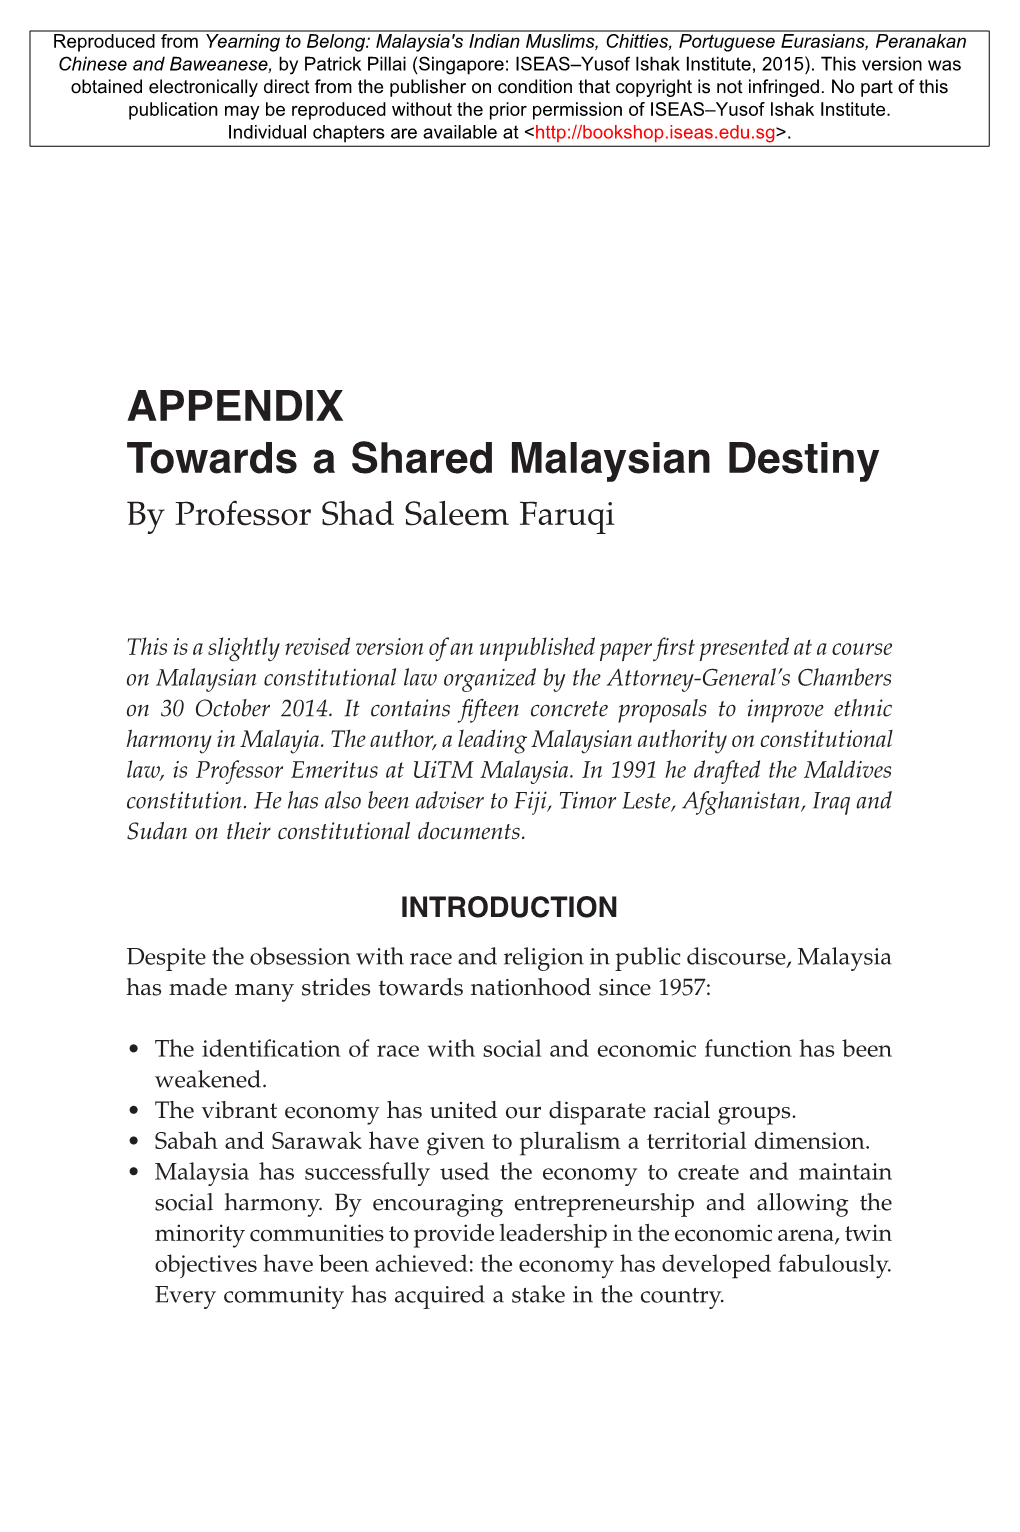 APPENDIX Towards a Shared Malaysian Destiny by Professor Shad Saleem Faruqi